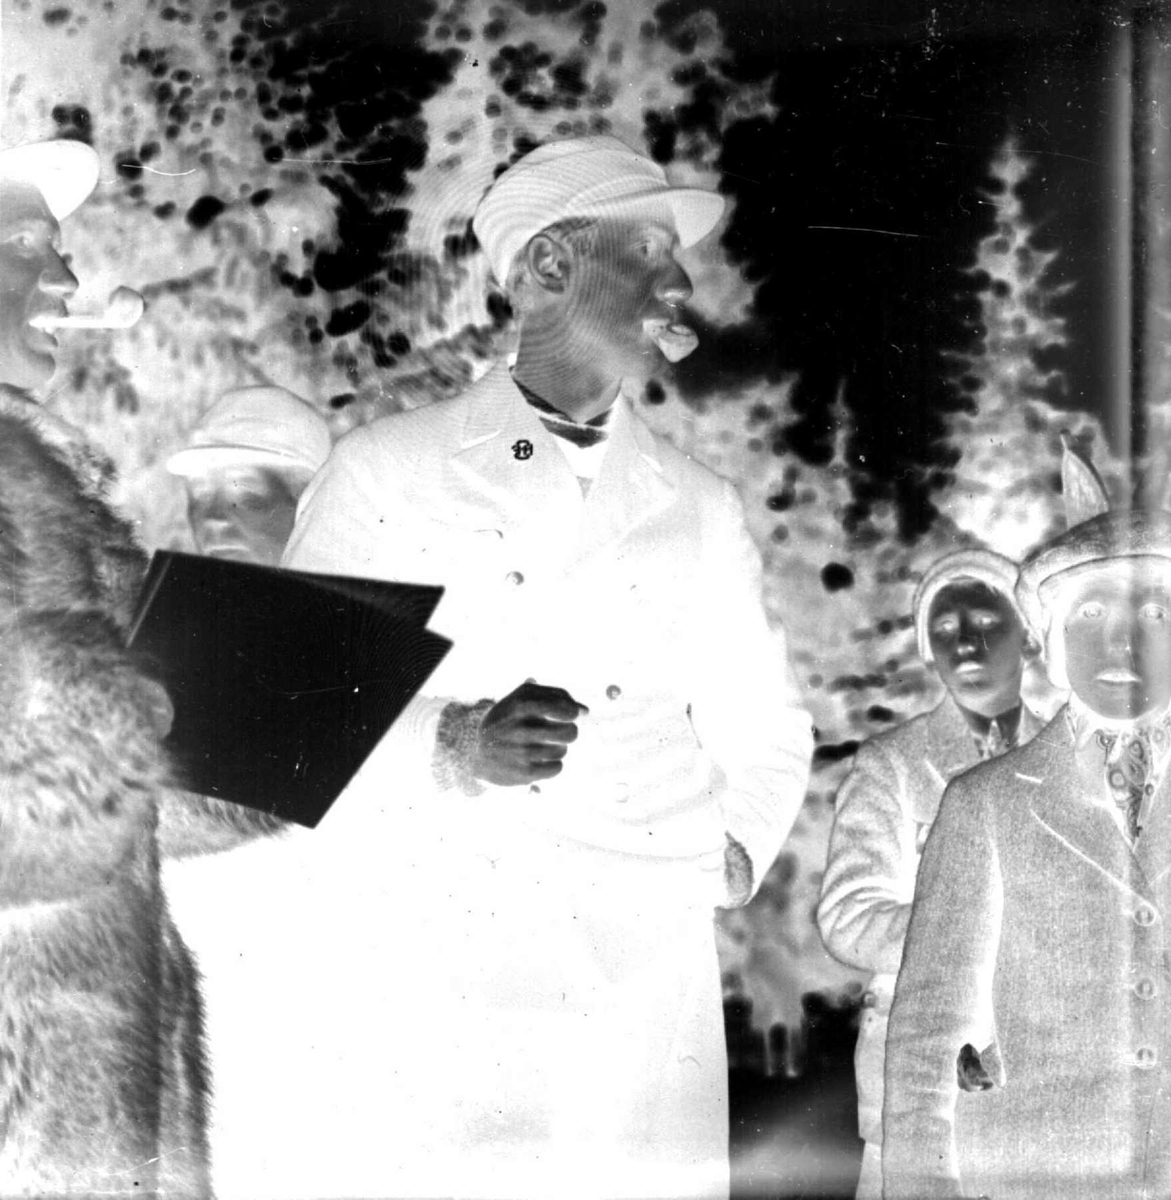 Hovedlandsrennet på Lillehammer, Lysgårdsbakken 1927. Adjutant Østgaard